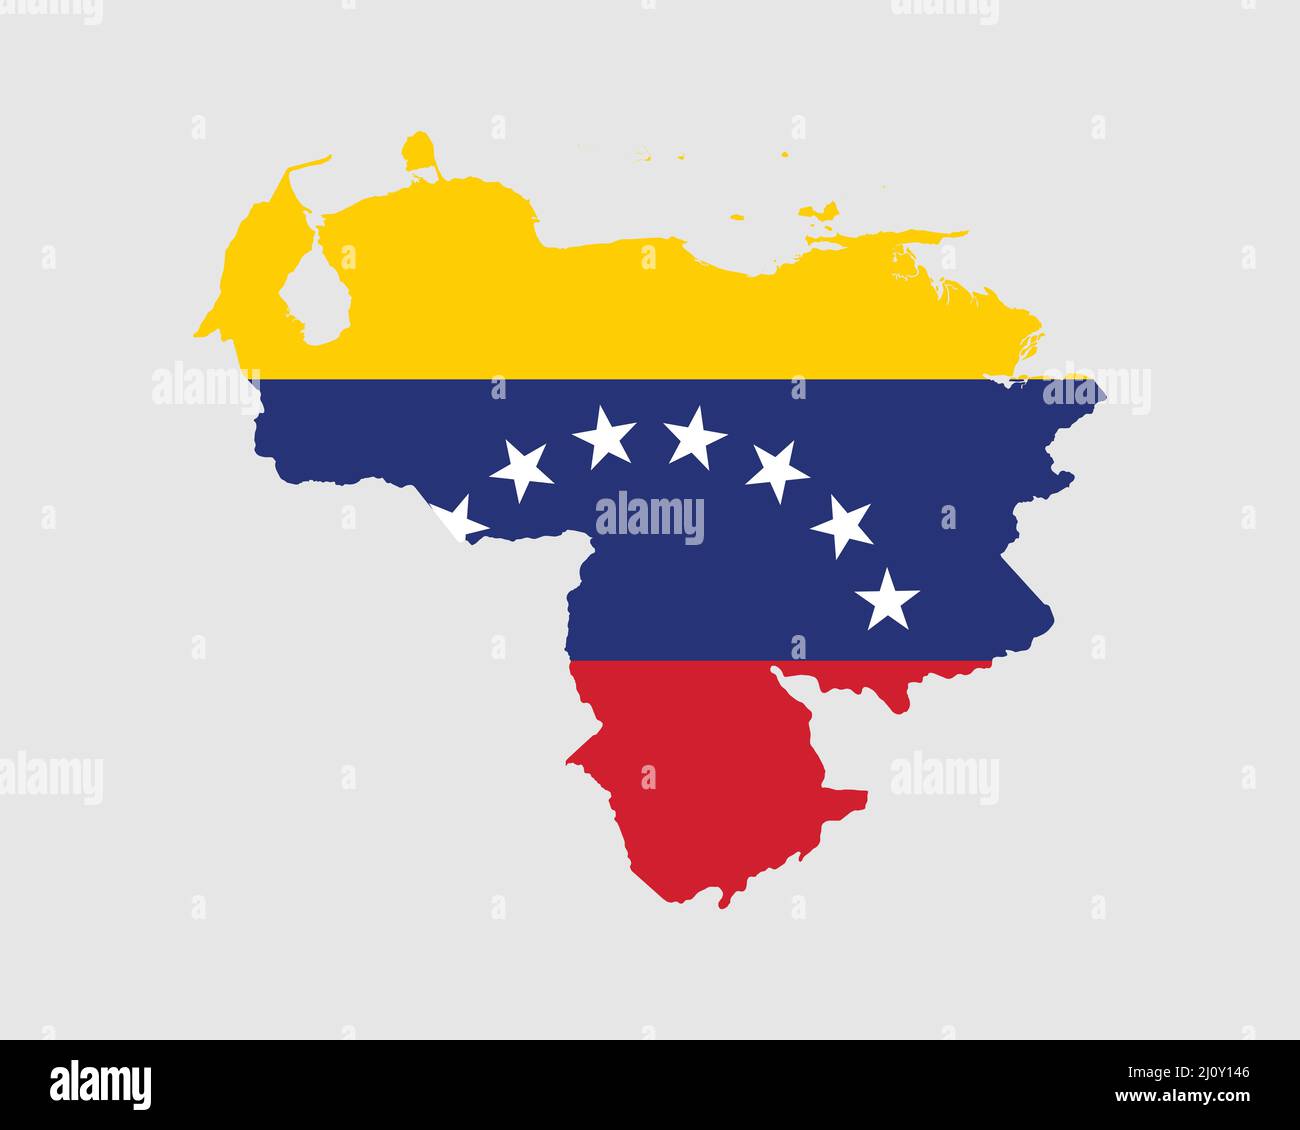 Venezuela Flag Map Map Of The Bolivarian Republic Of Venezuela With